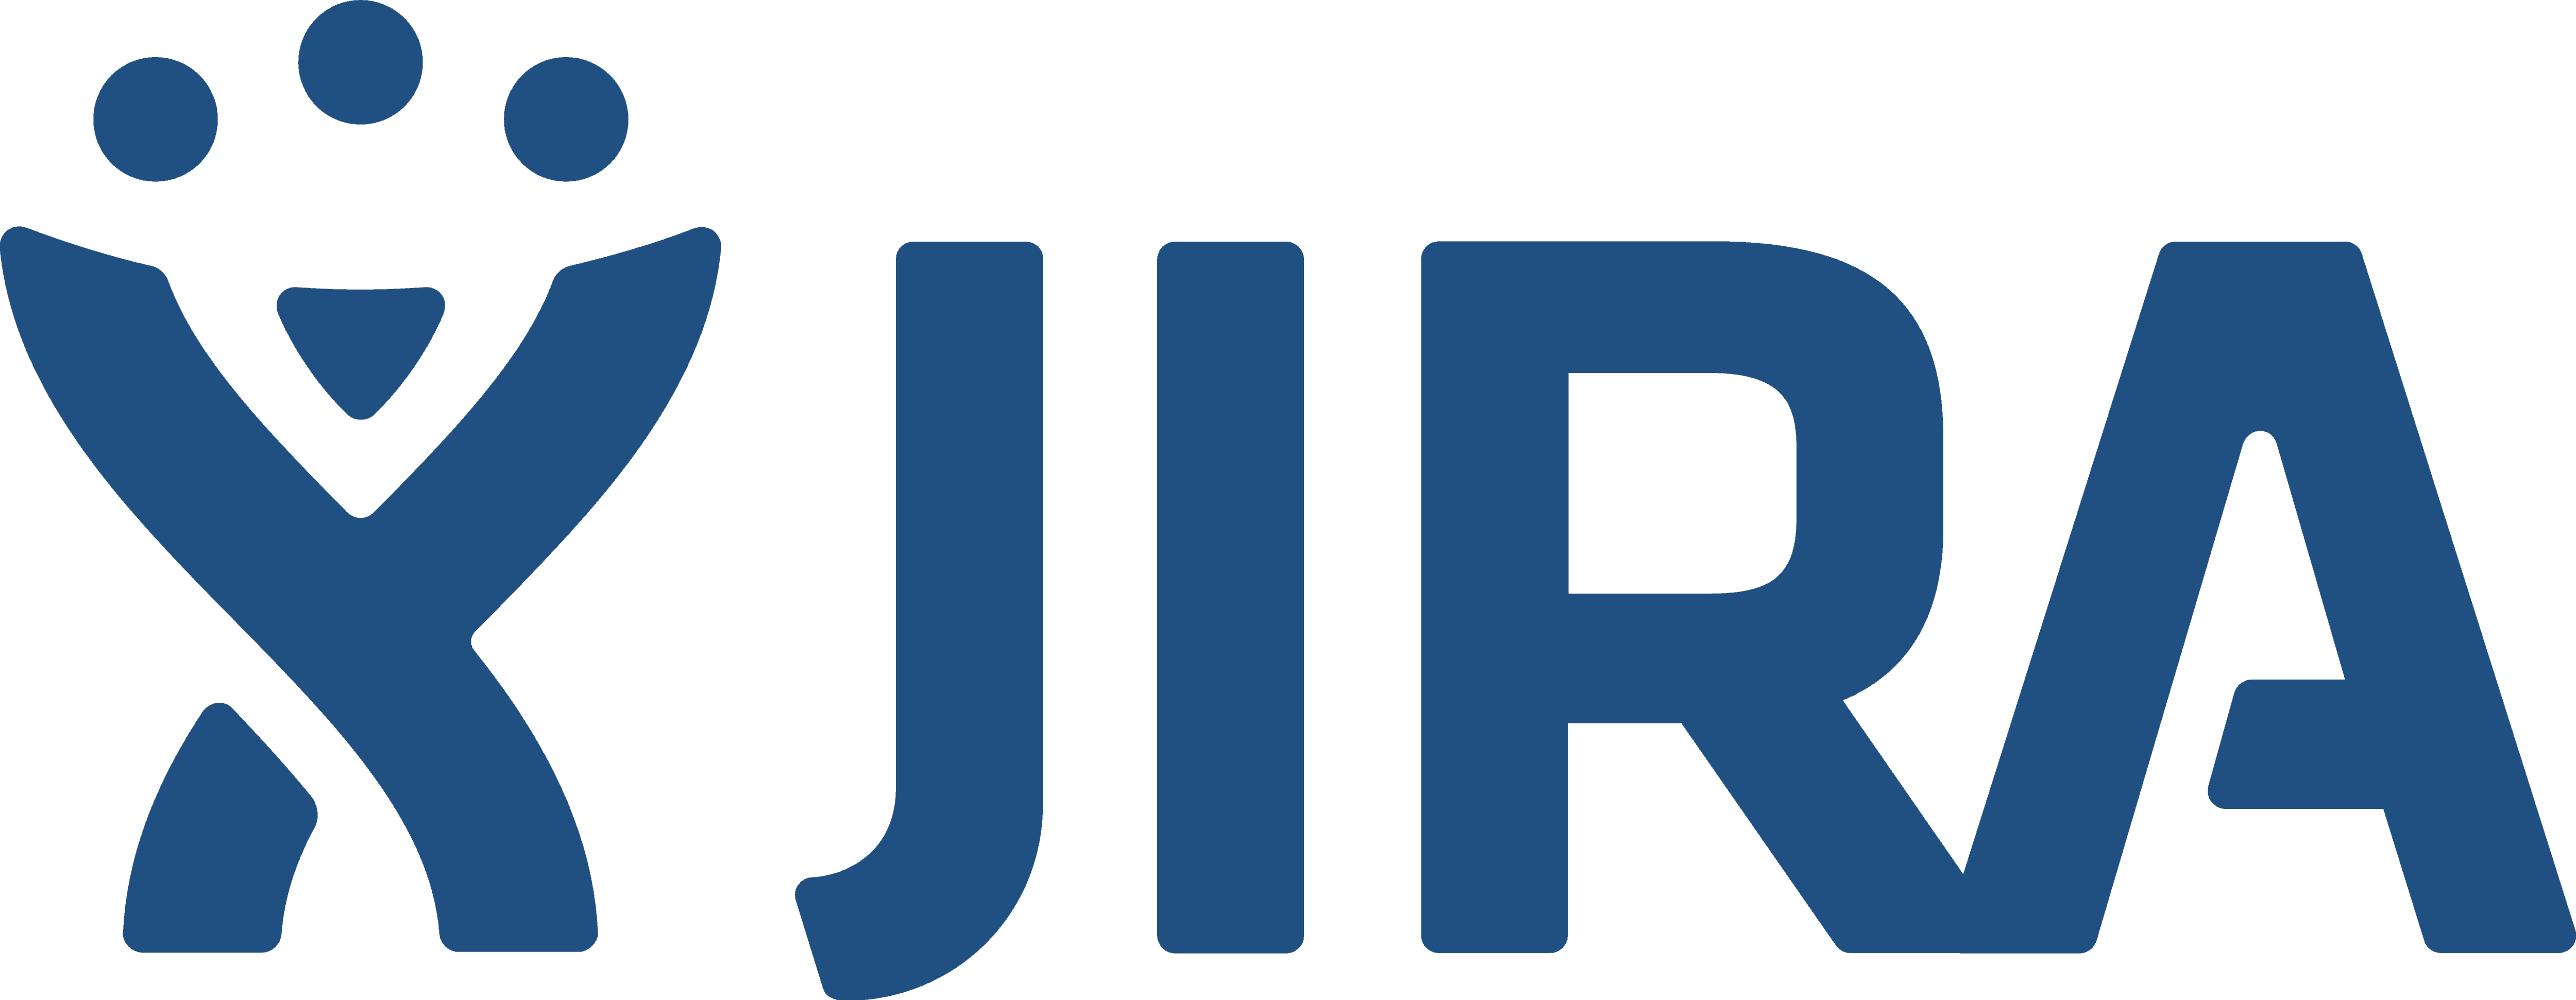 Jira Logo PNG HD Isolated